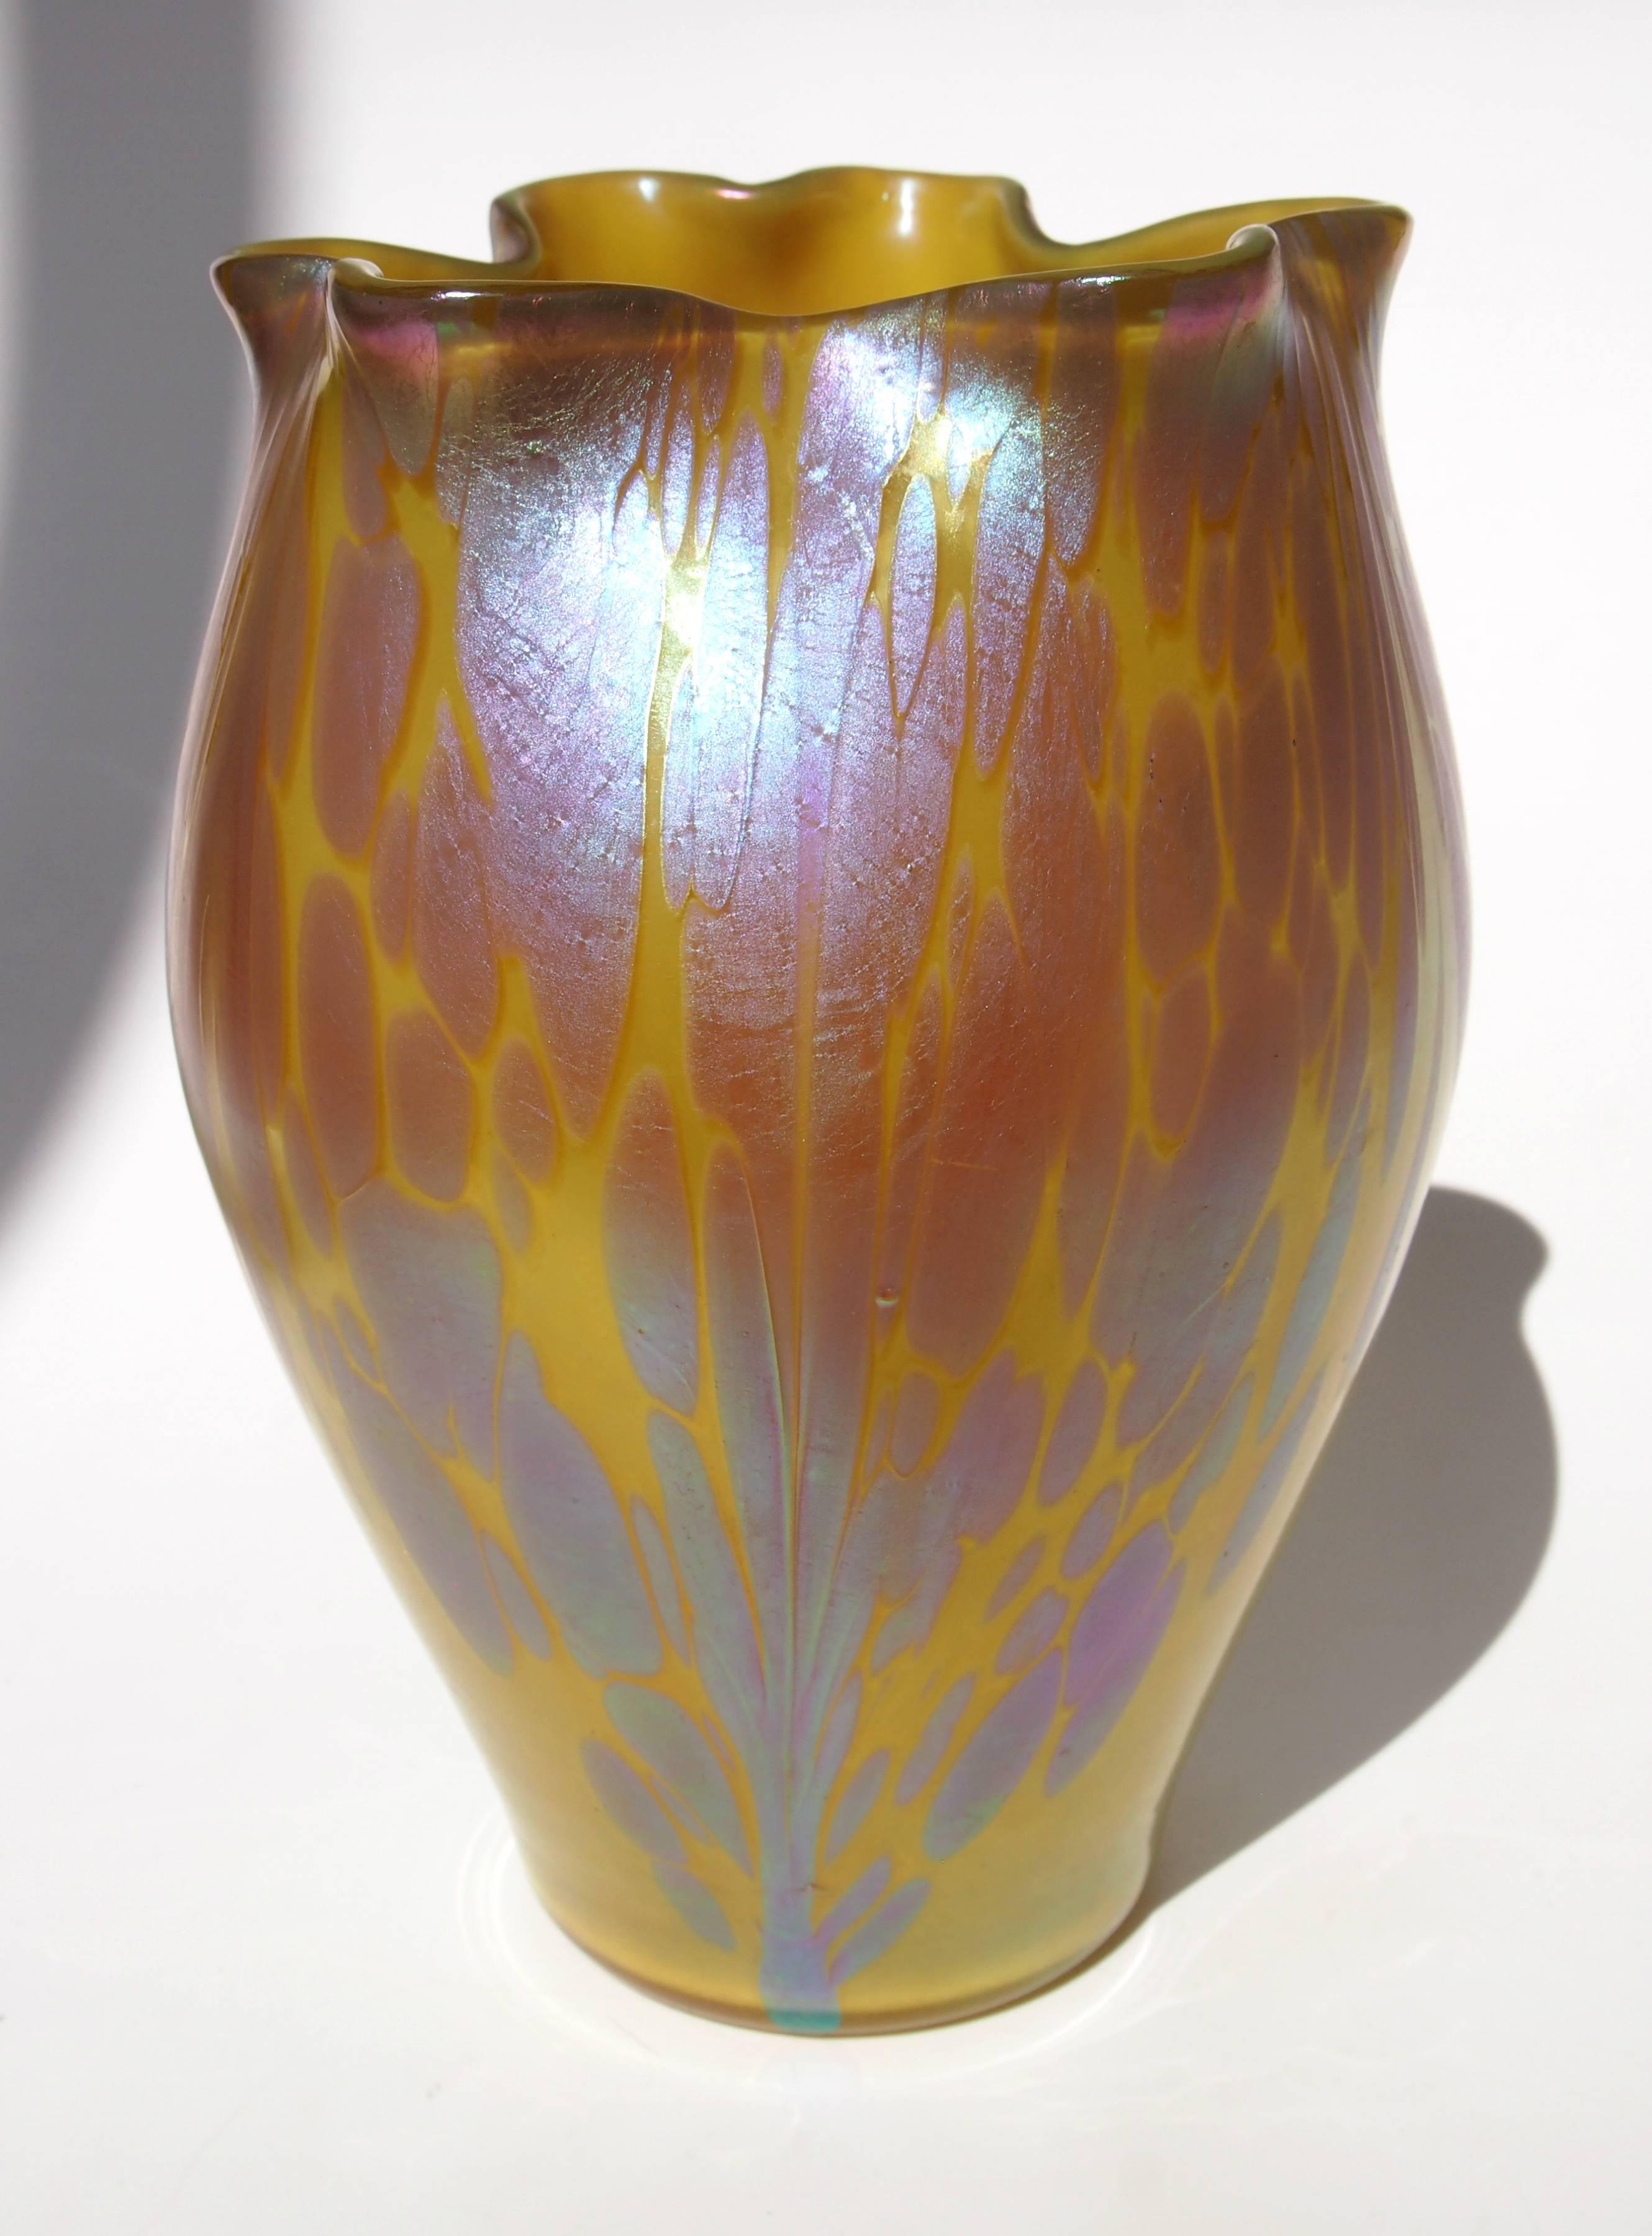 Jugendstil Art Nouveau Loetz Metalic Yellow Phaenomen Medici Vase